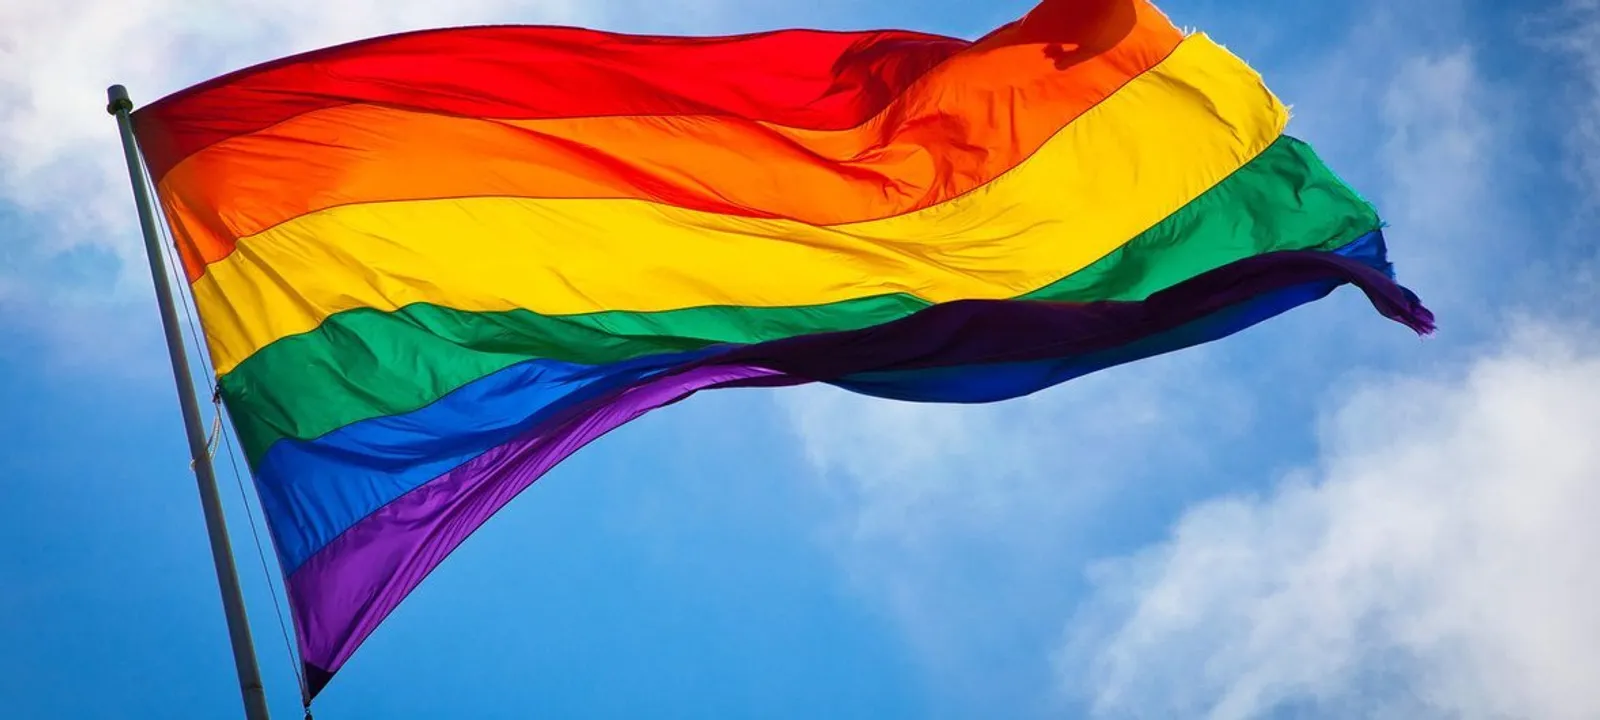 Ditegur Gus Miftah, Deddy Corbuzier Minta Maaf dan Hapus Konten LGBT